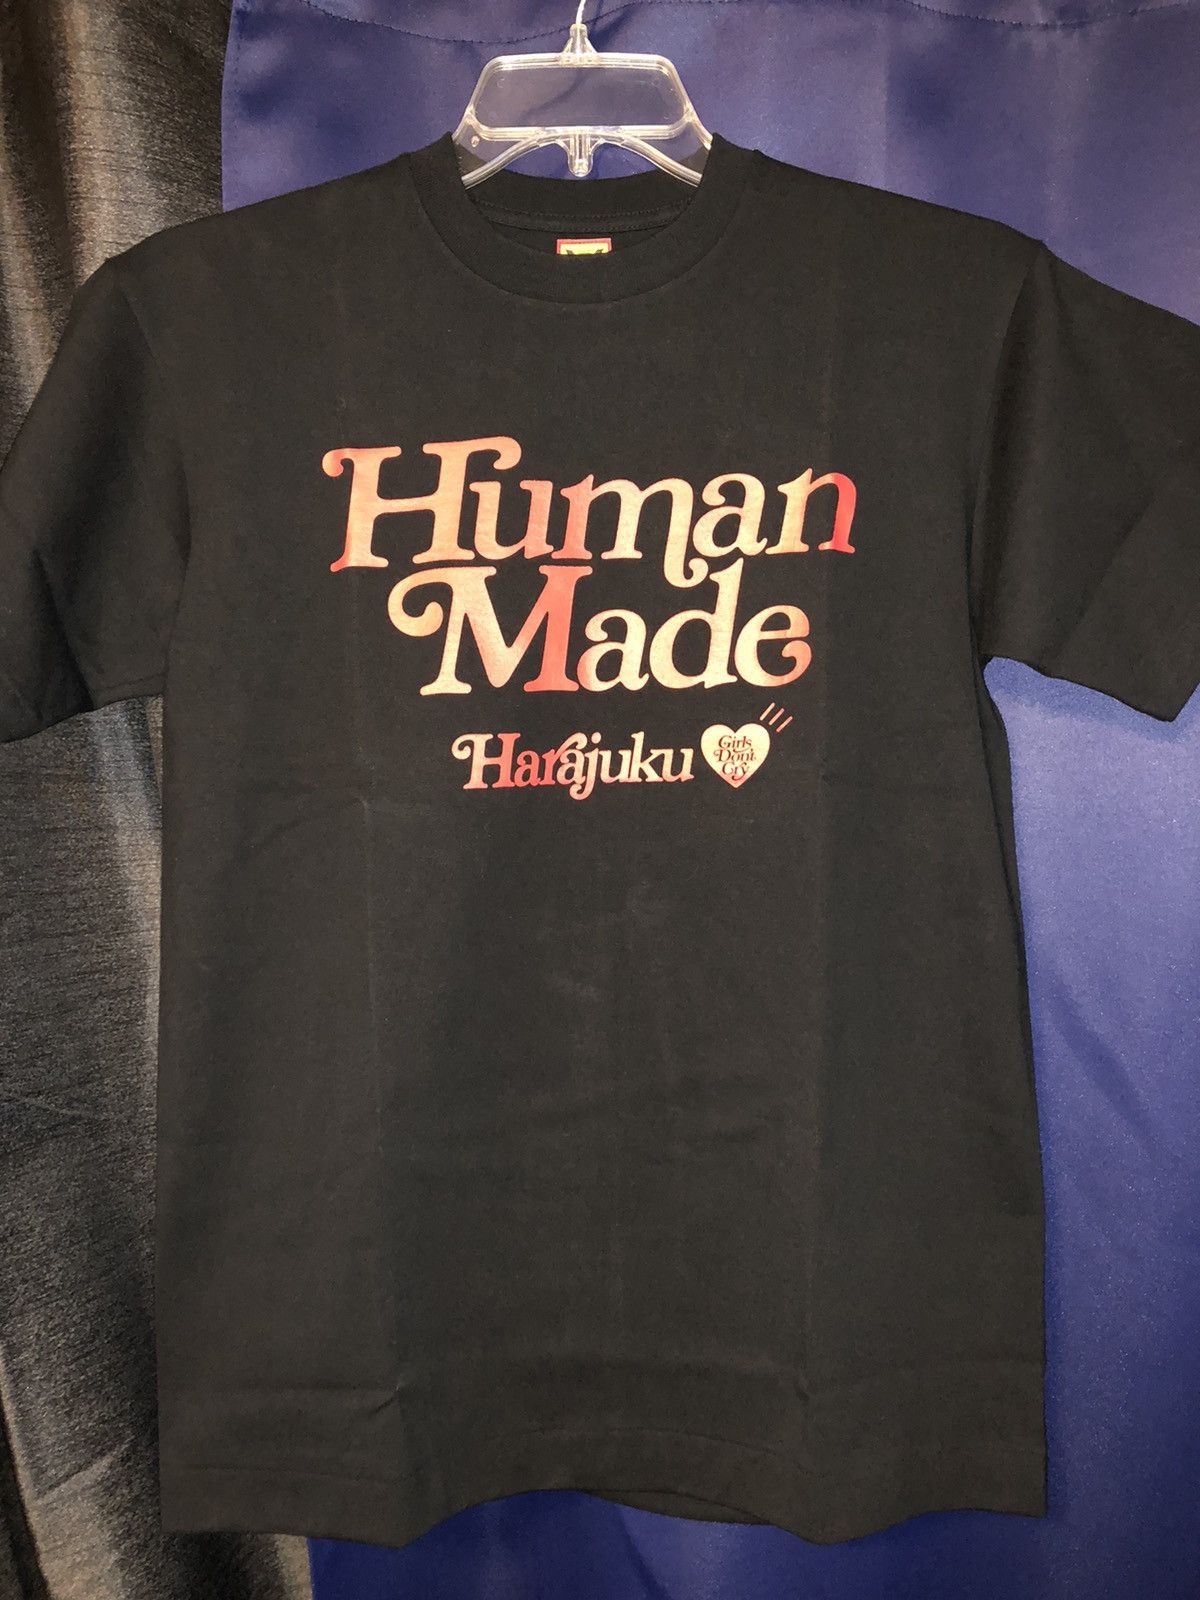 Human Made Humanmade X Gdc Harajuku Tee | Grailed